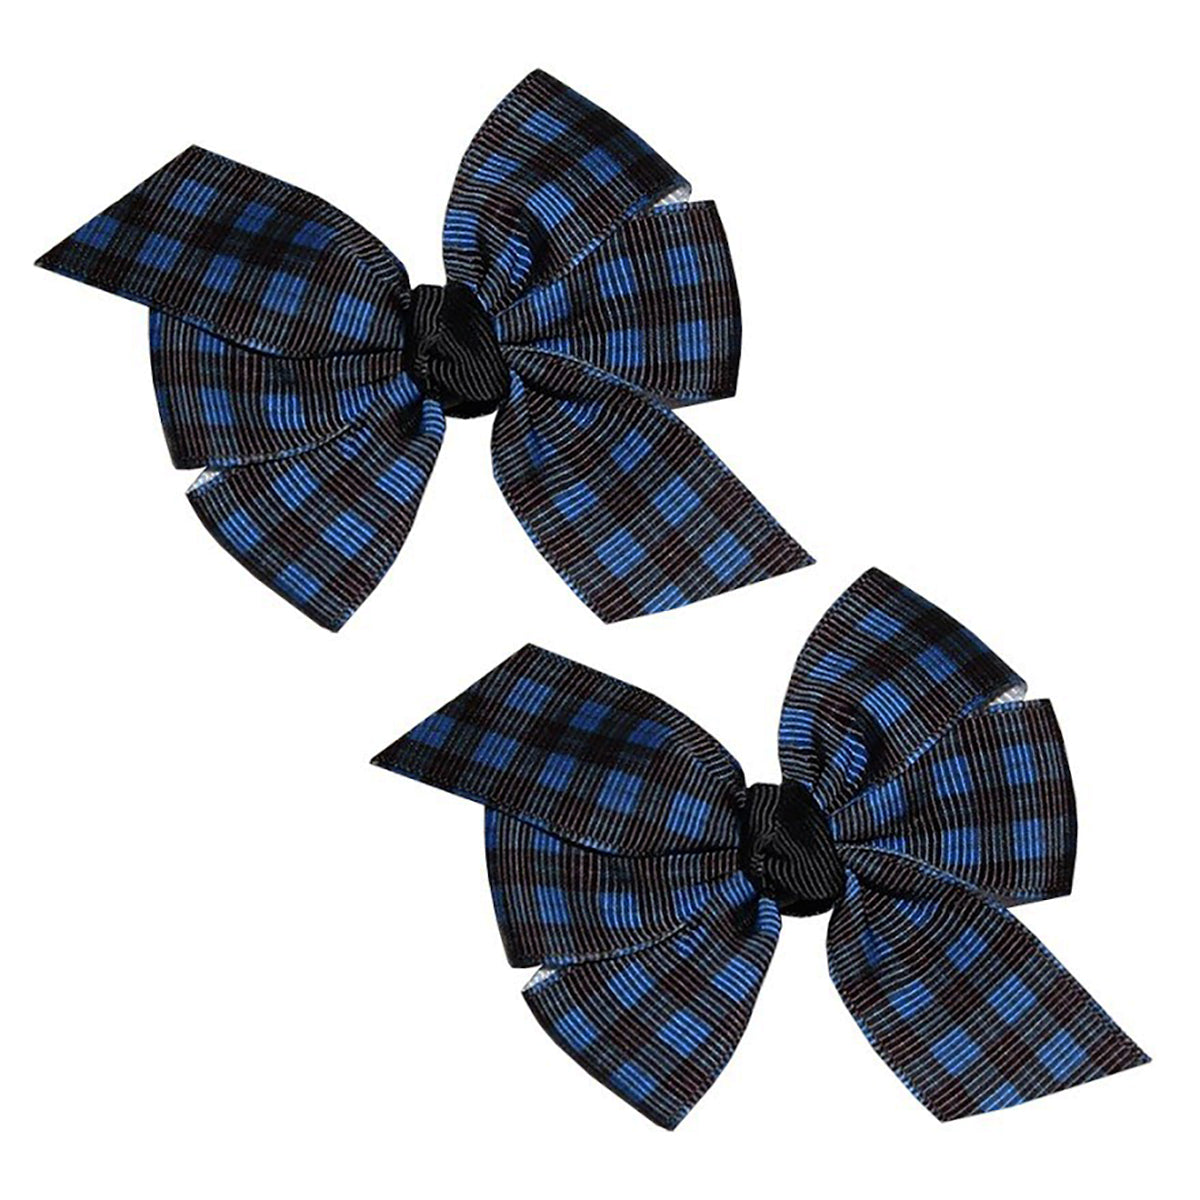 1" Grosgrain Ribbon Scottish Blue Tartan Plaid DIY Hair Bow Crafts